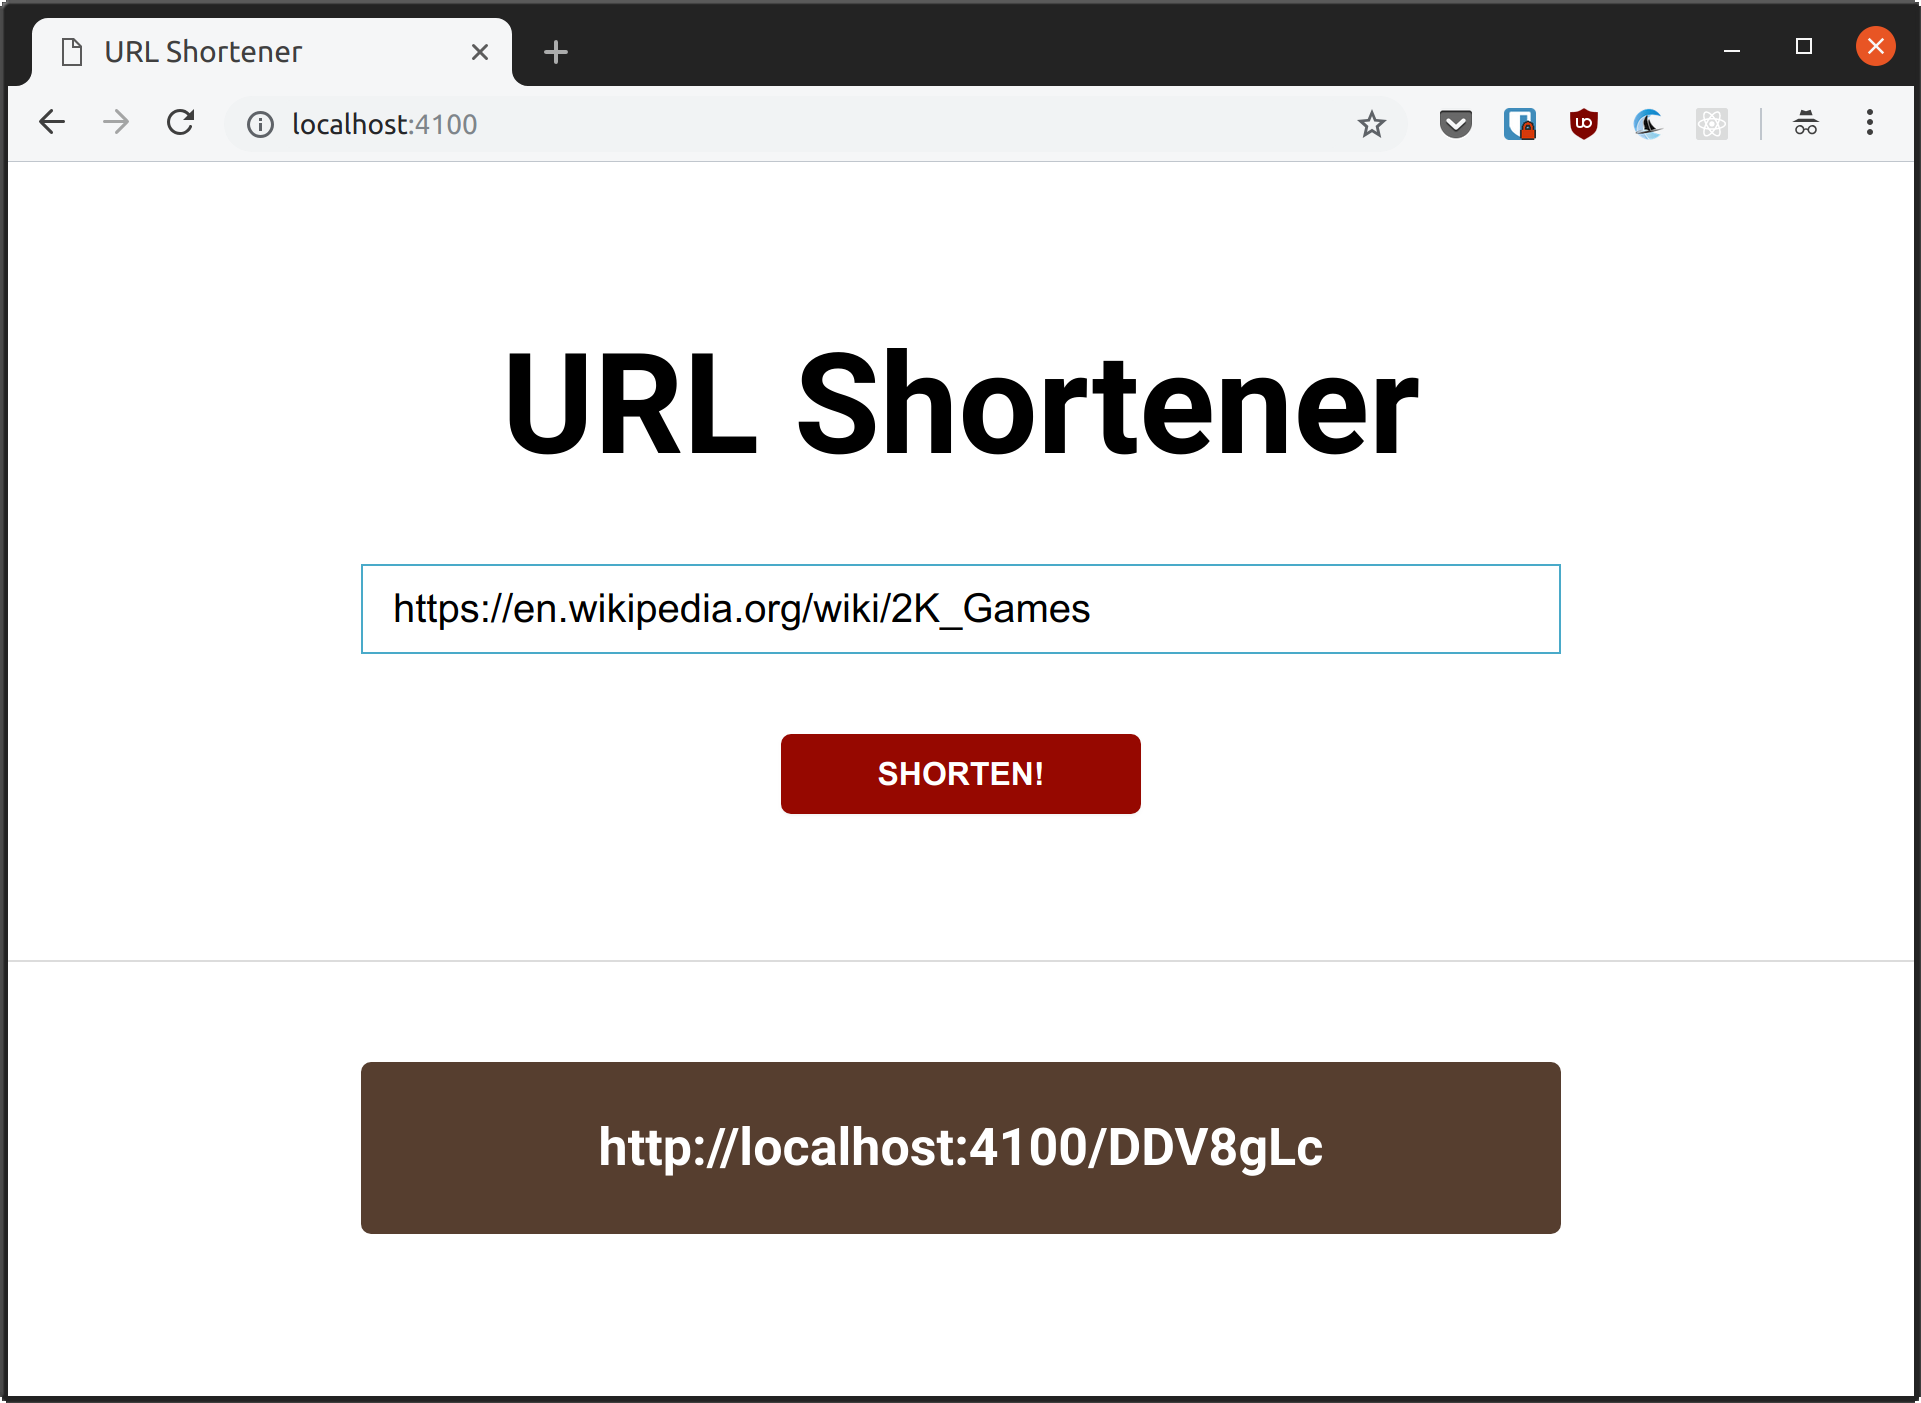 URL is shortened